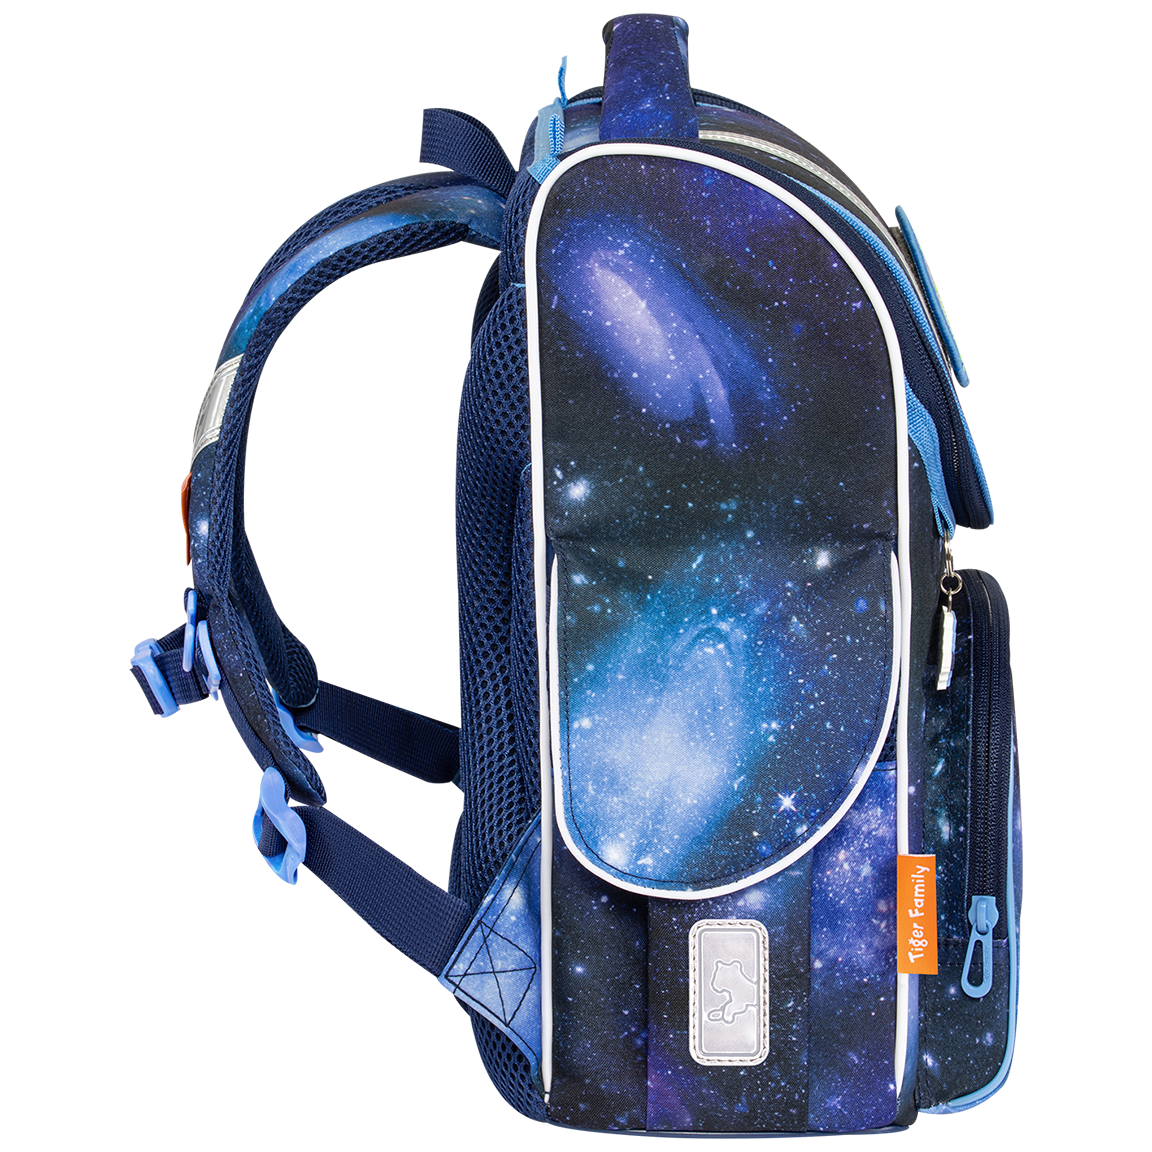 Cặp Chống Gù Nature Quest Schoolbag Pro - Super Galaxy - Tiger Family TGNQ-077A